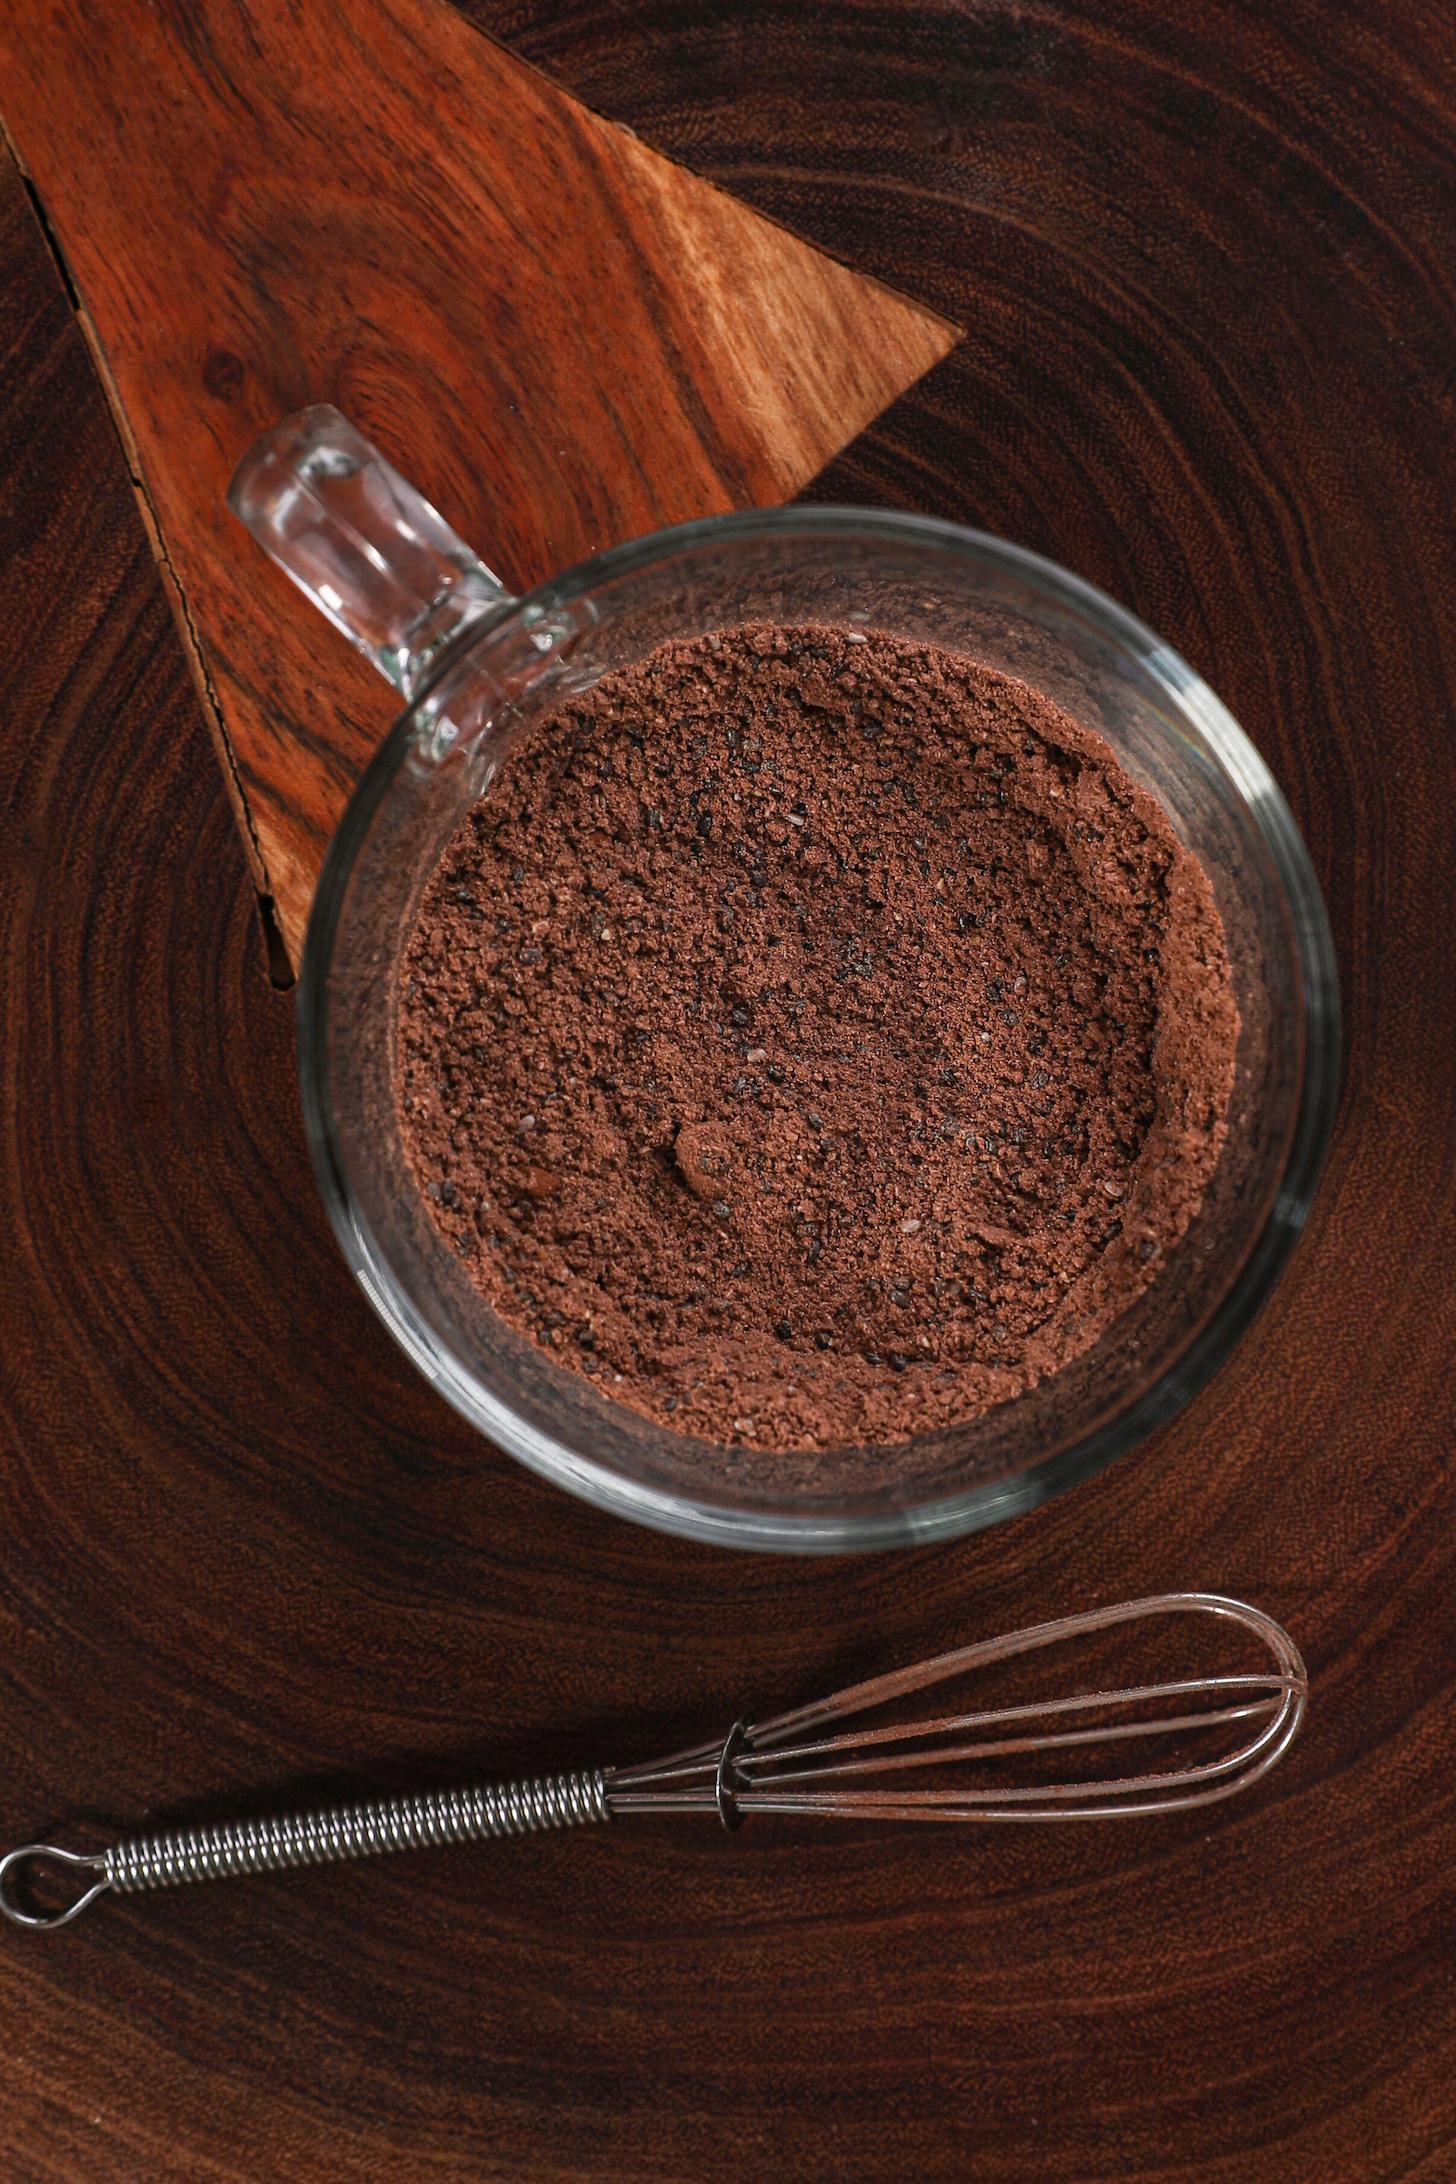 A mug with a chocolate-coloured powder.